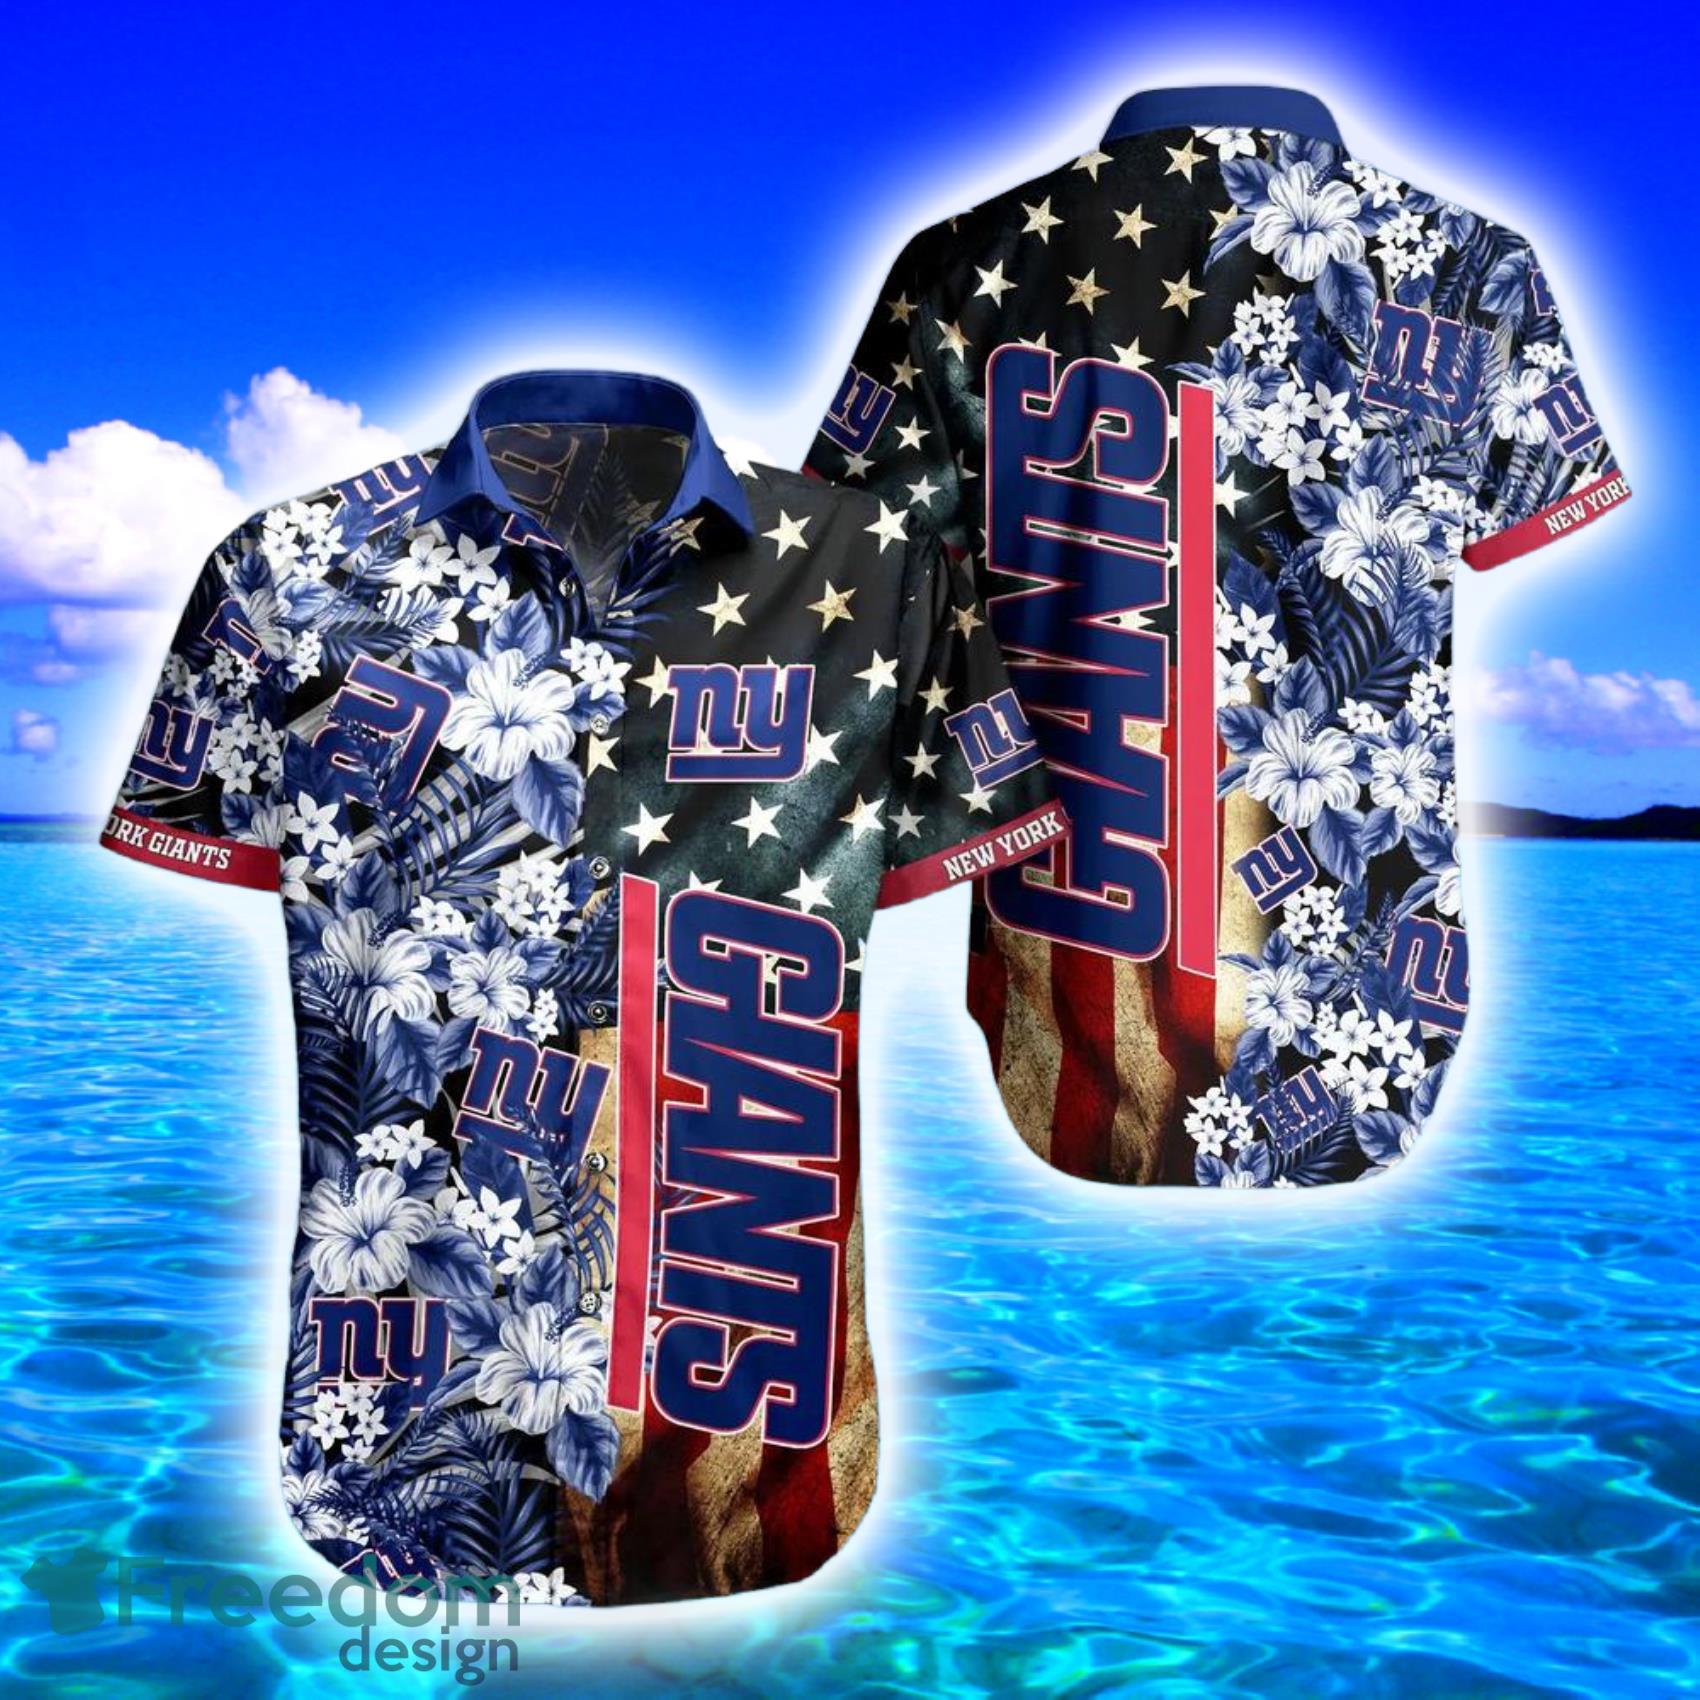 New York Mets MLB Mickey Lover Hawaiian Shirt For Fans - Freedomdesign